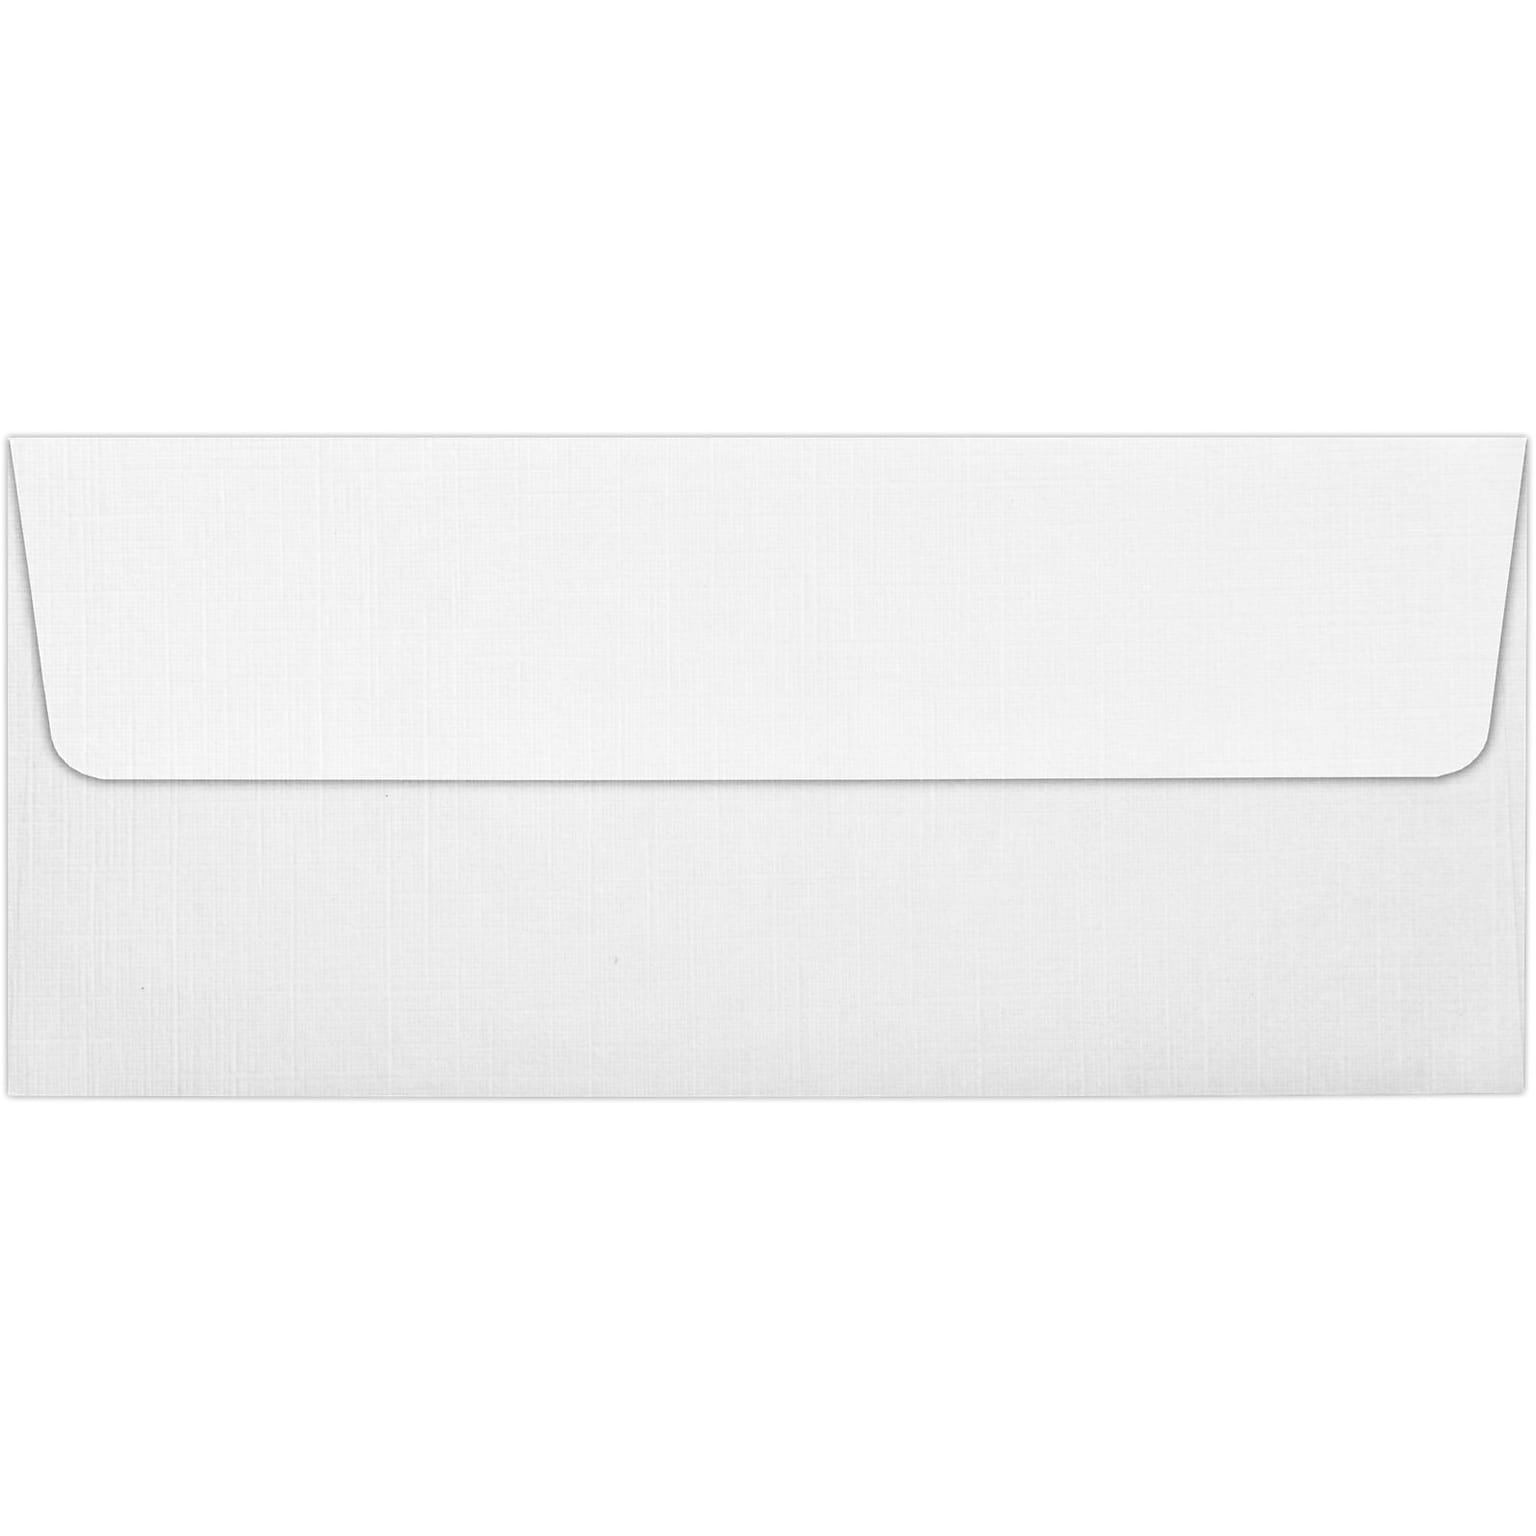 LUX Square Flap Self Seal #10 Business Envelope, 4 1/2 x 9 1/2, White, 250/Box (4860-WLI-250)